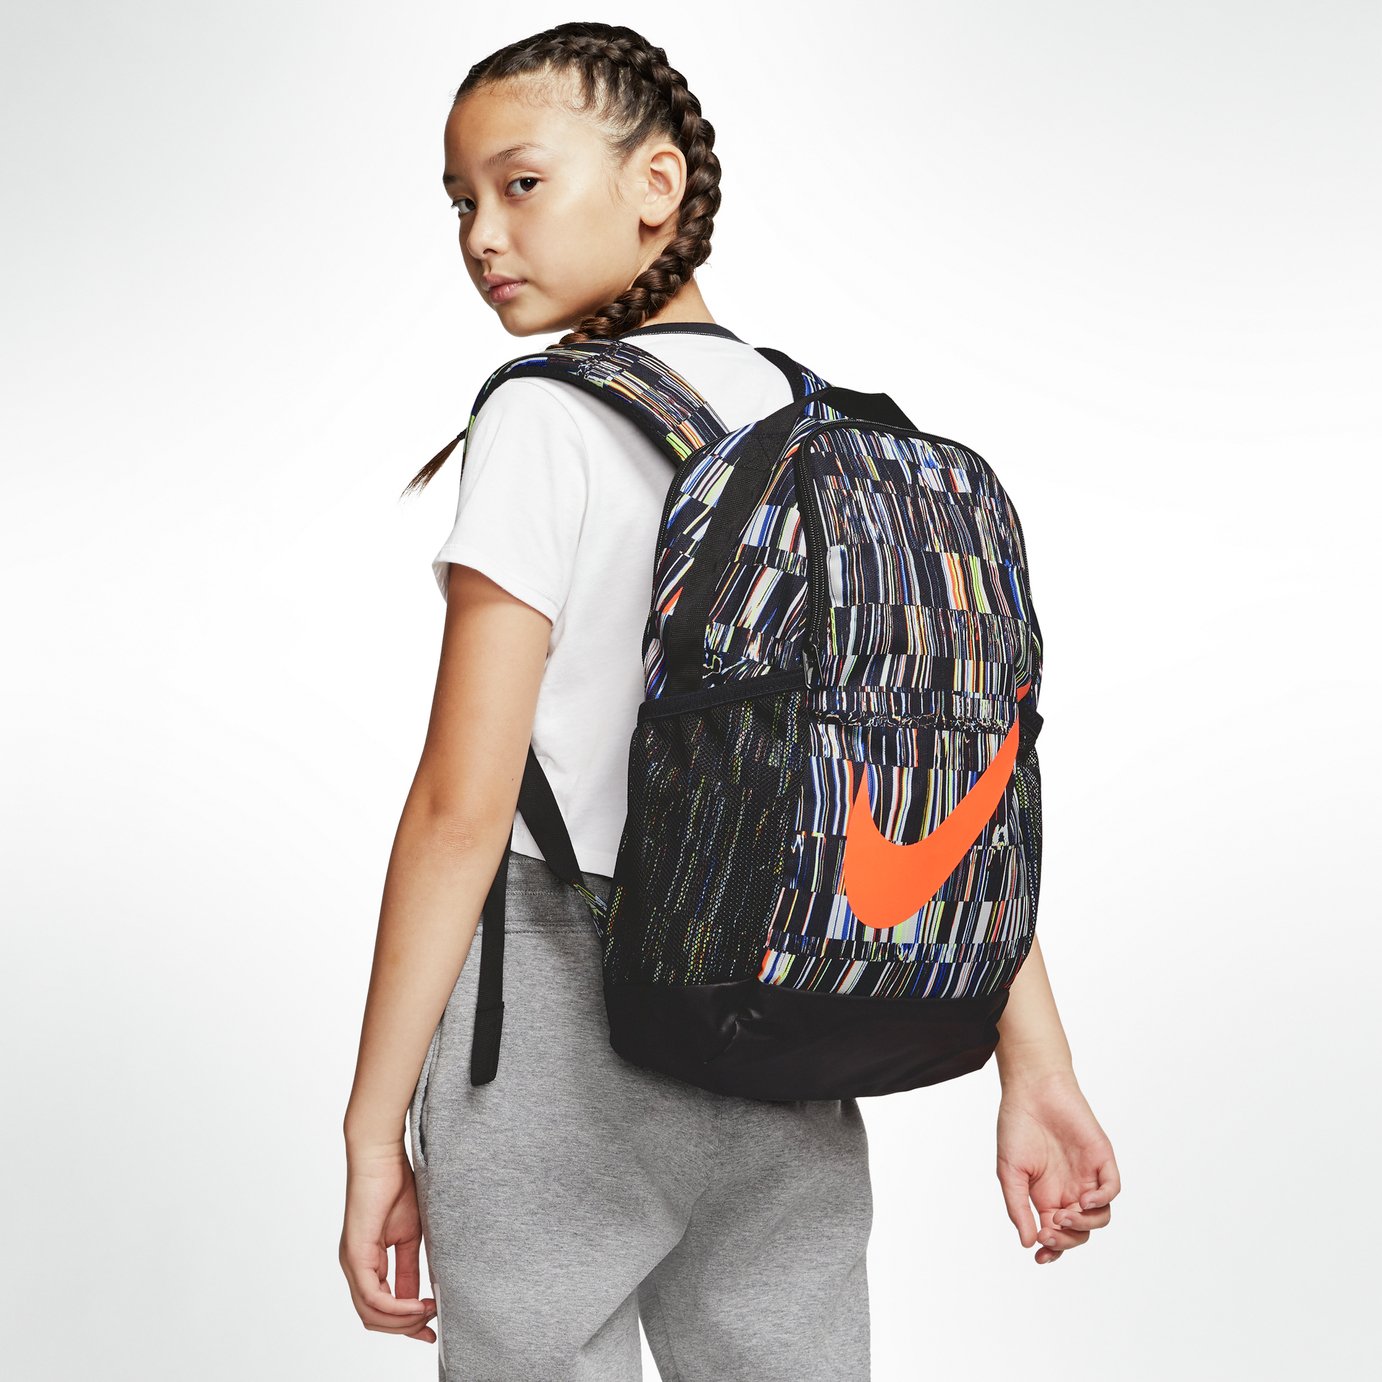 Nike Brasilia Pattern 18L Backpack Review